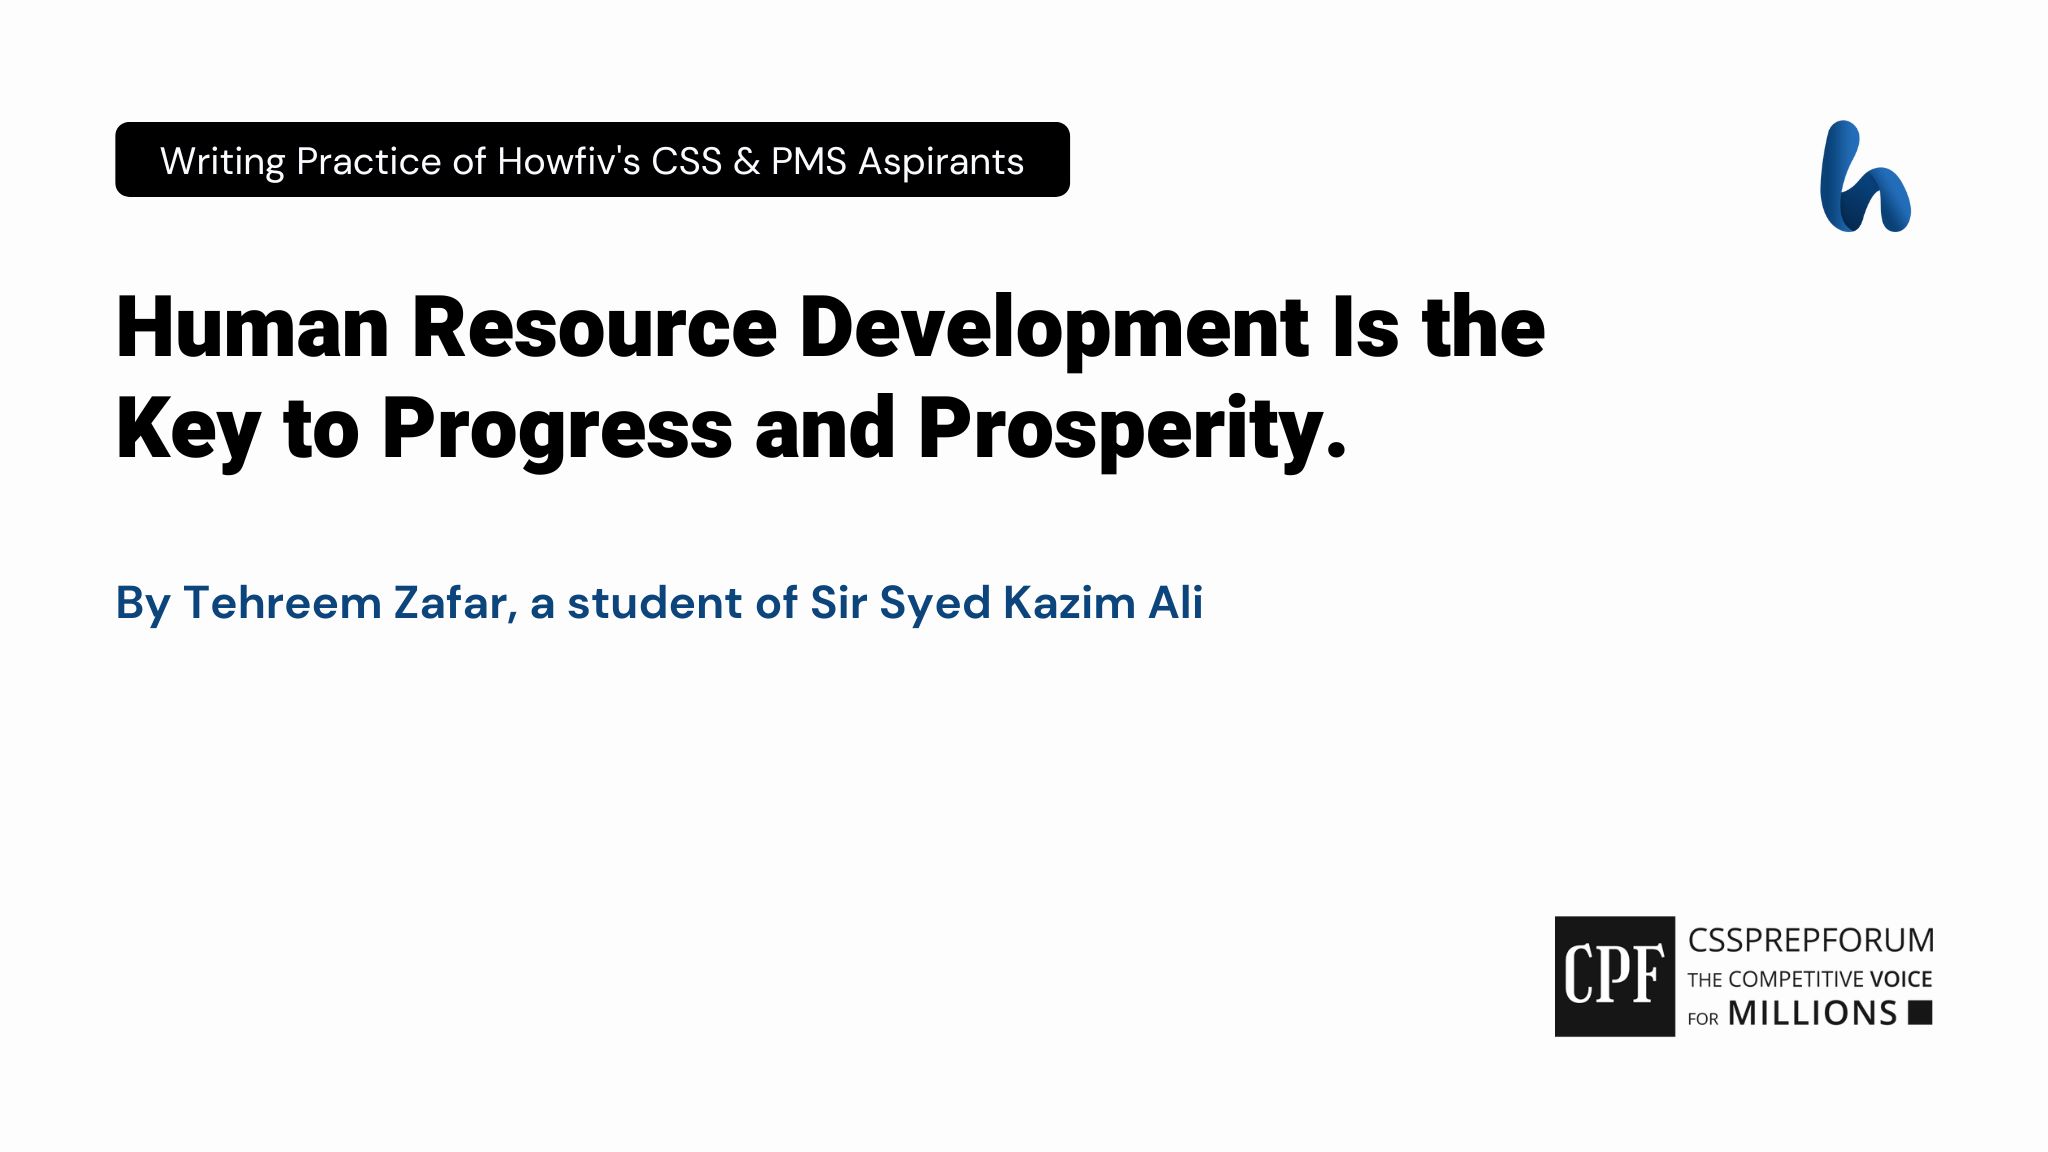 Human Resource Development Is the Key to Progress and Prosperity.